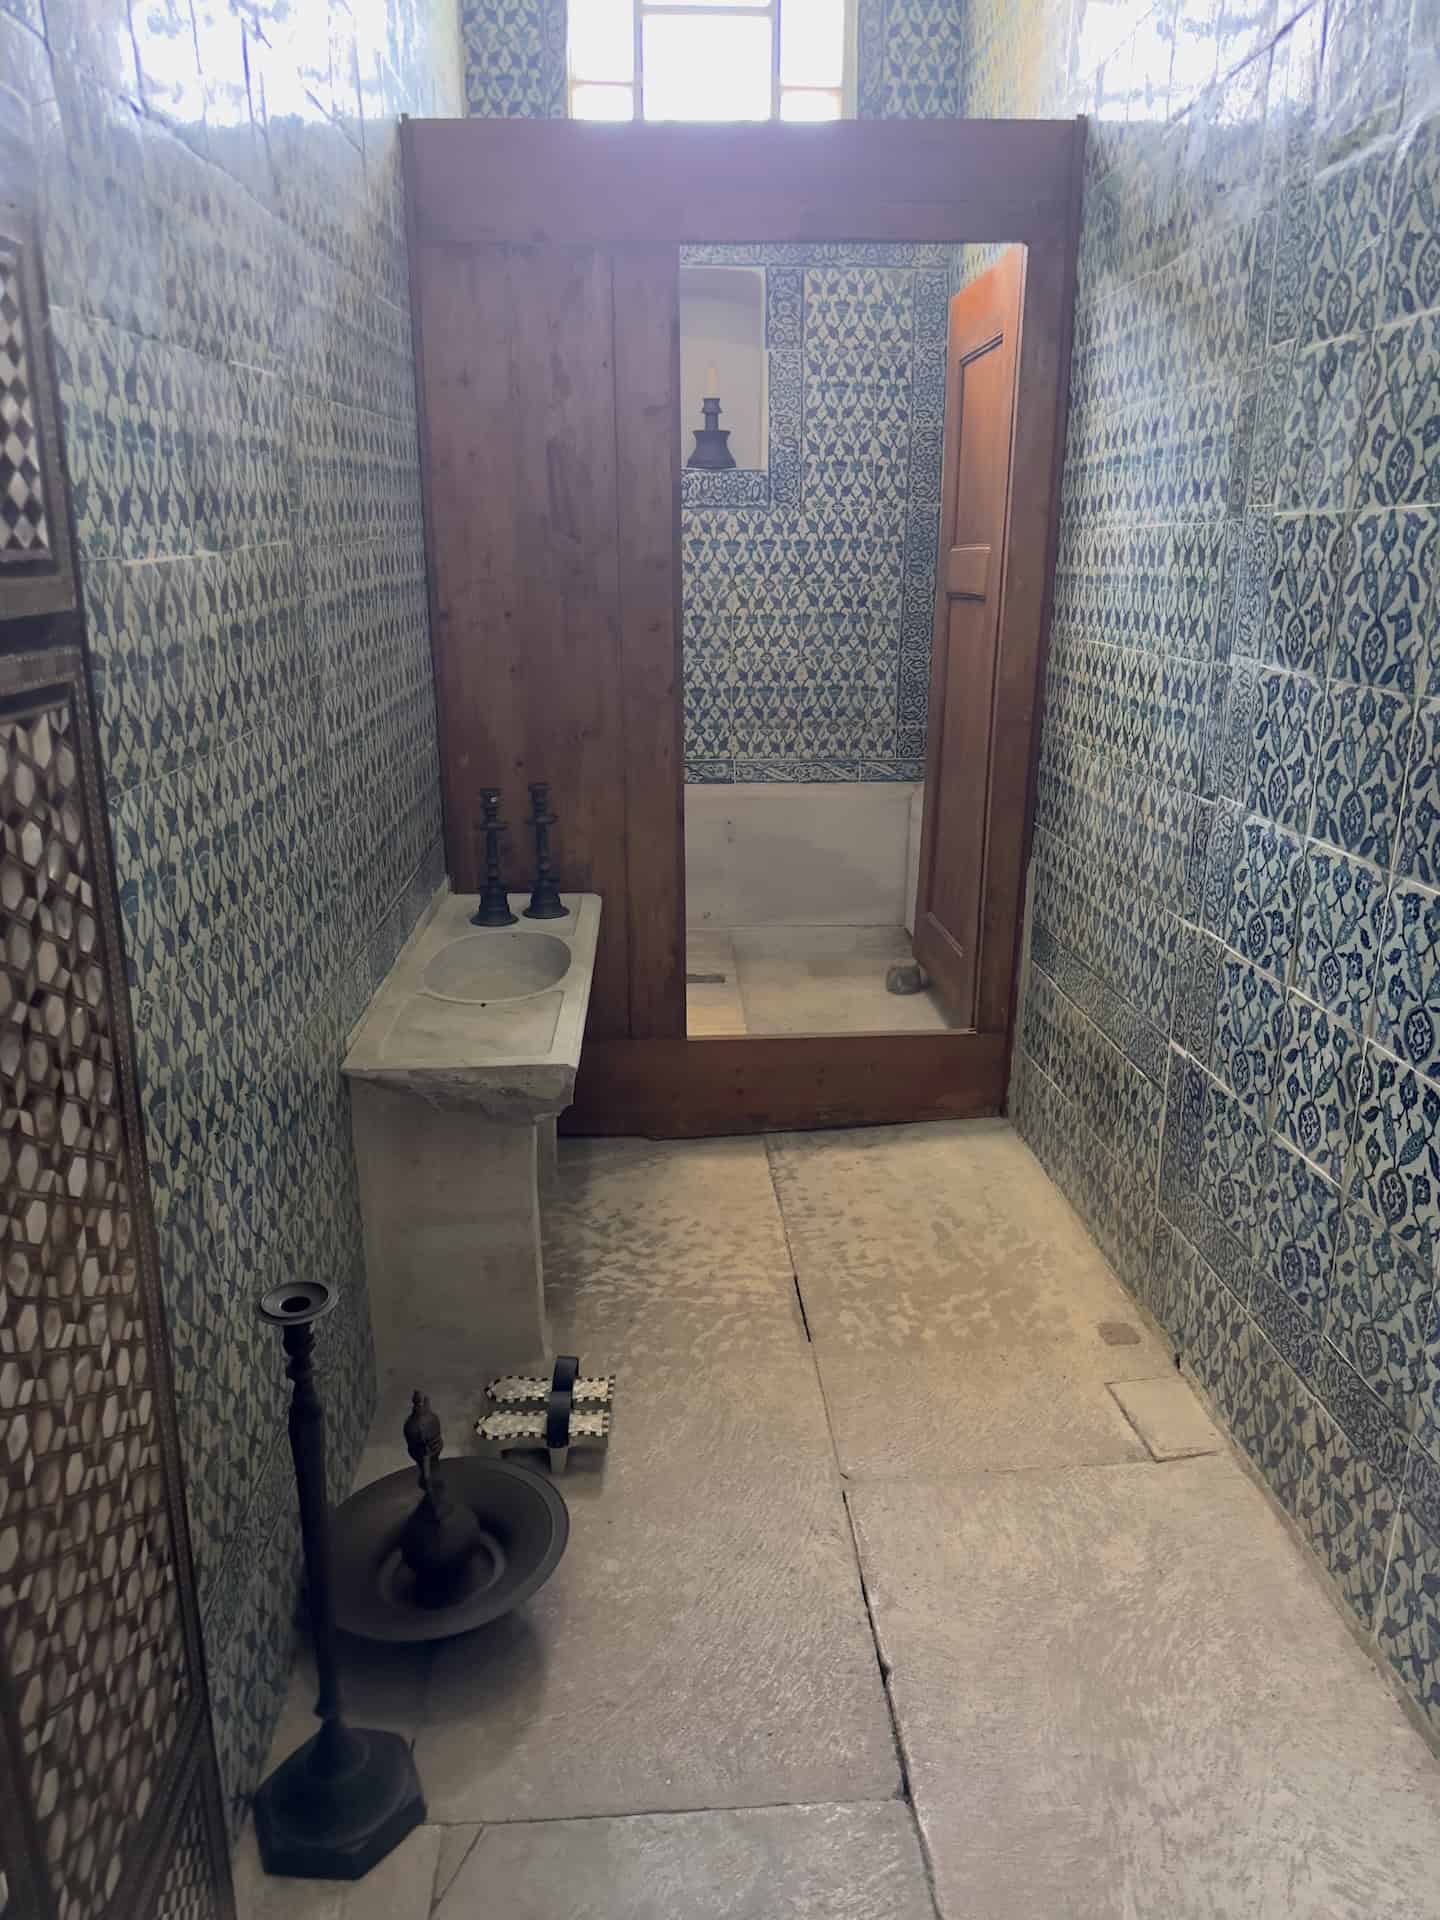 Bathroom at the Sultan's Pavilion